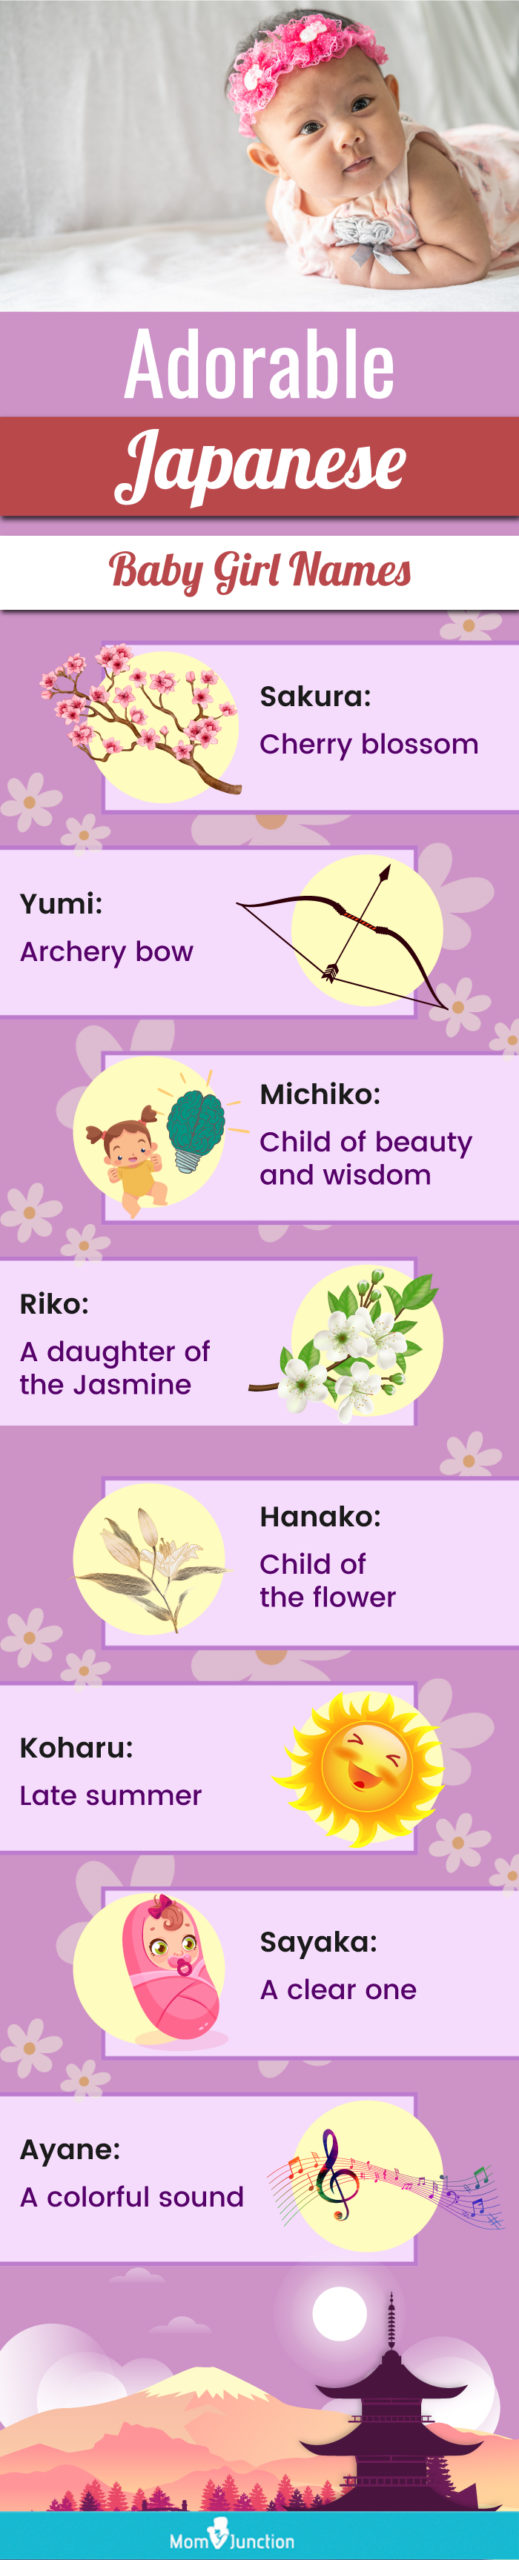 Popular Japanese Baby Names